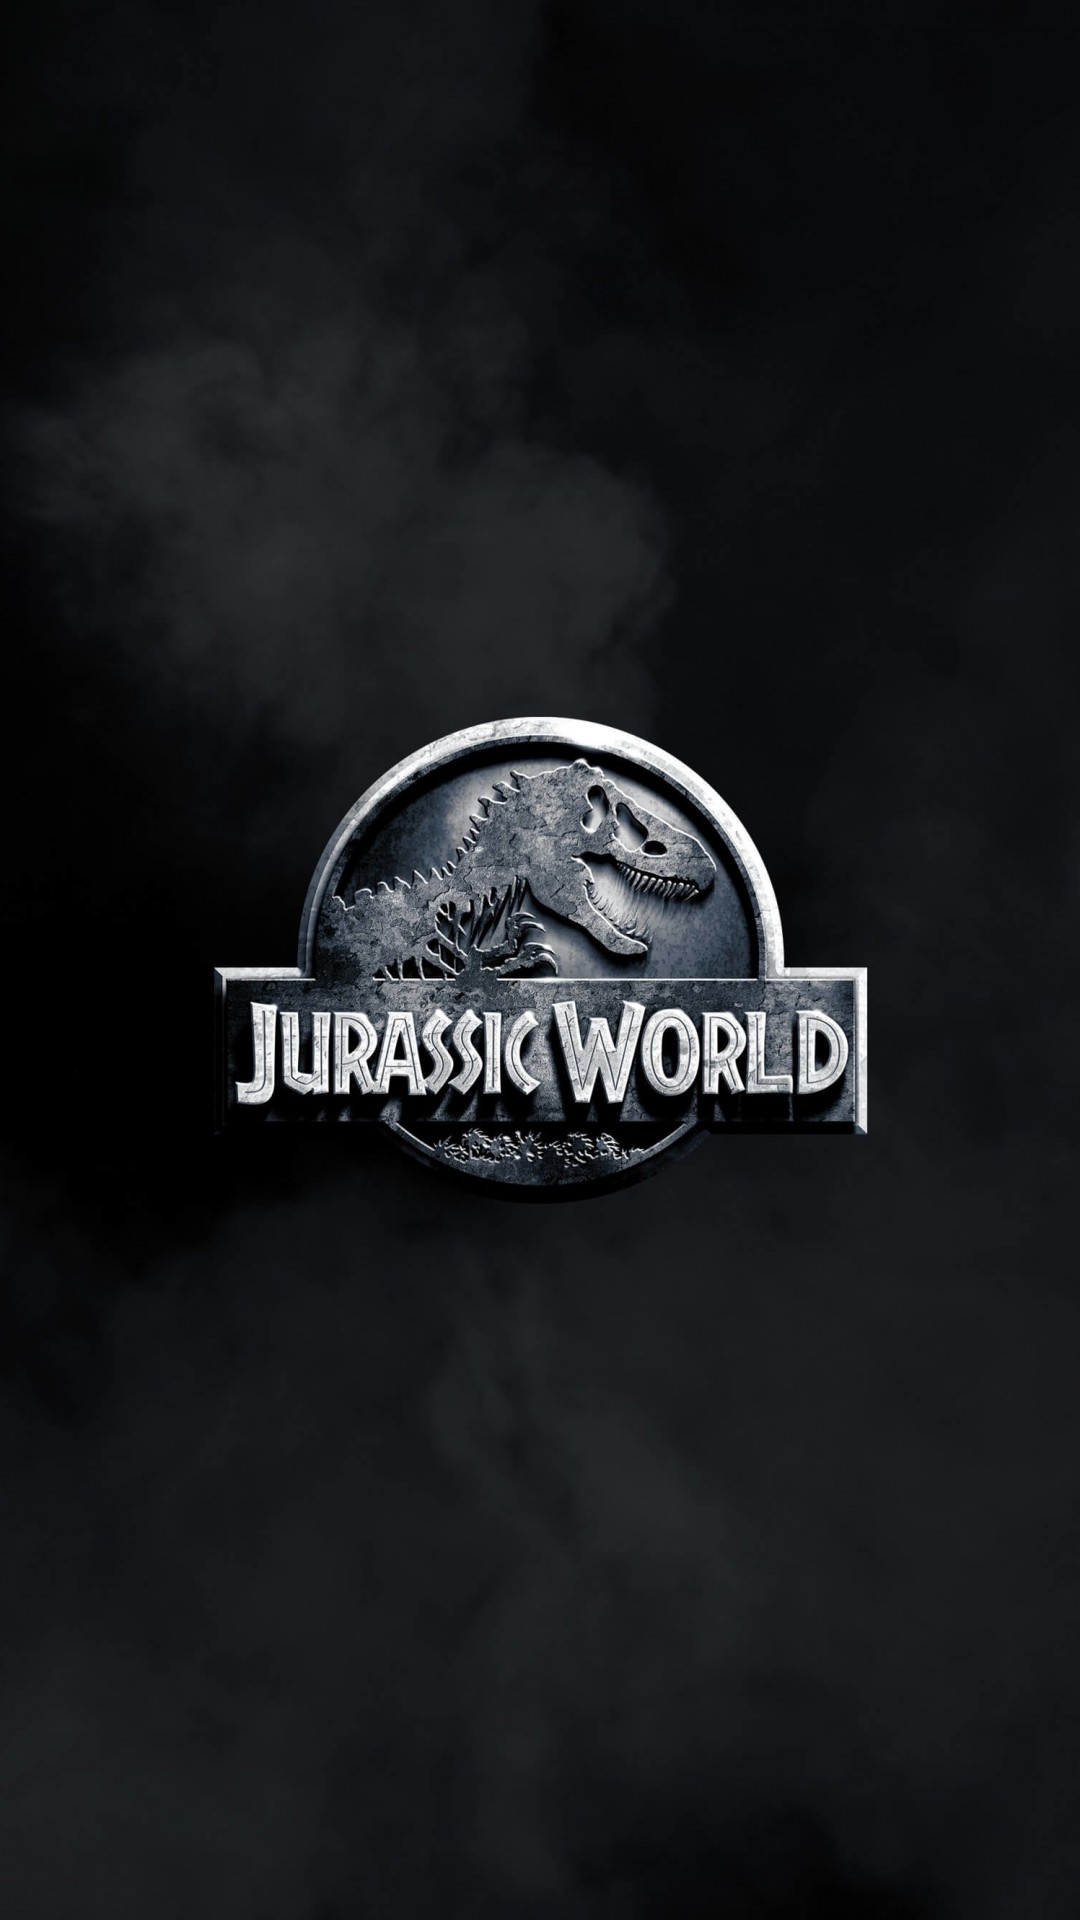 Jurassic World Wallpaper for Google Nexus 5